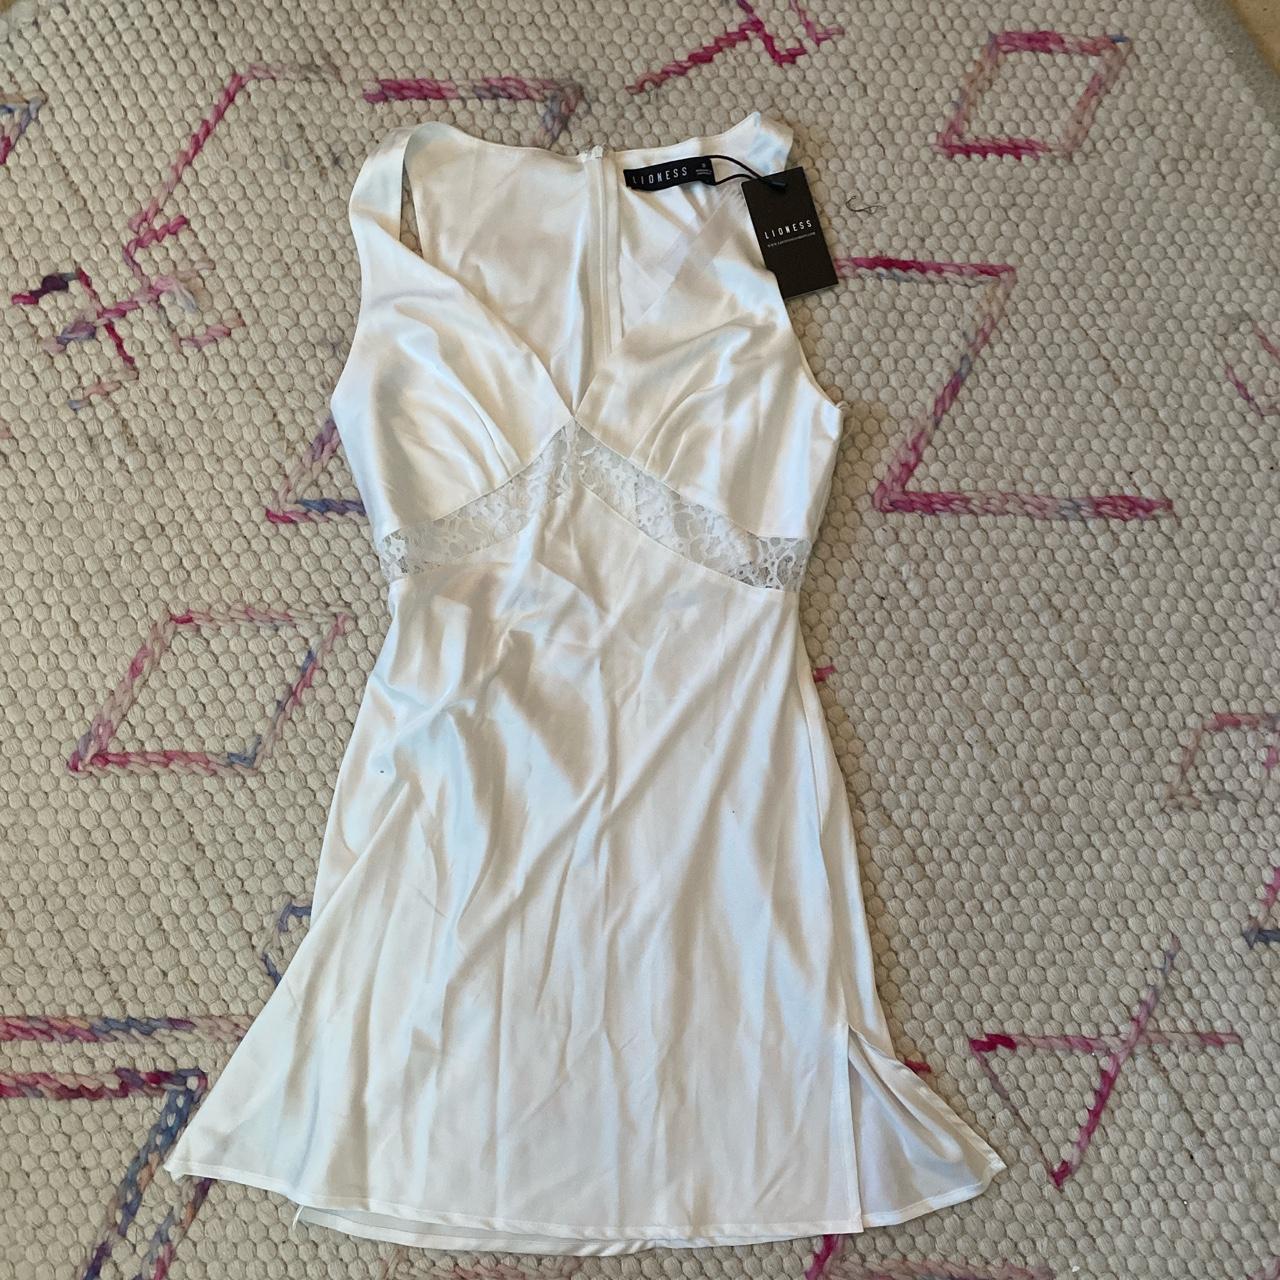 Prettiest lioness white lace mini dress 🤍 Size:... - Depop